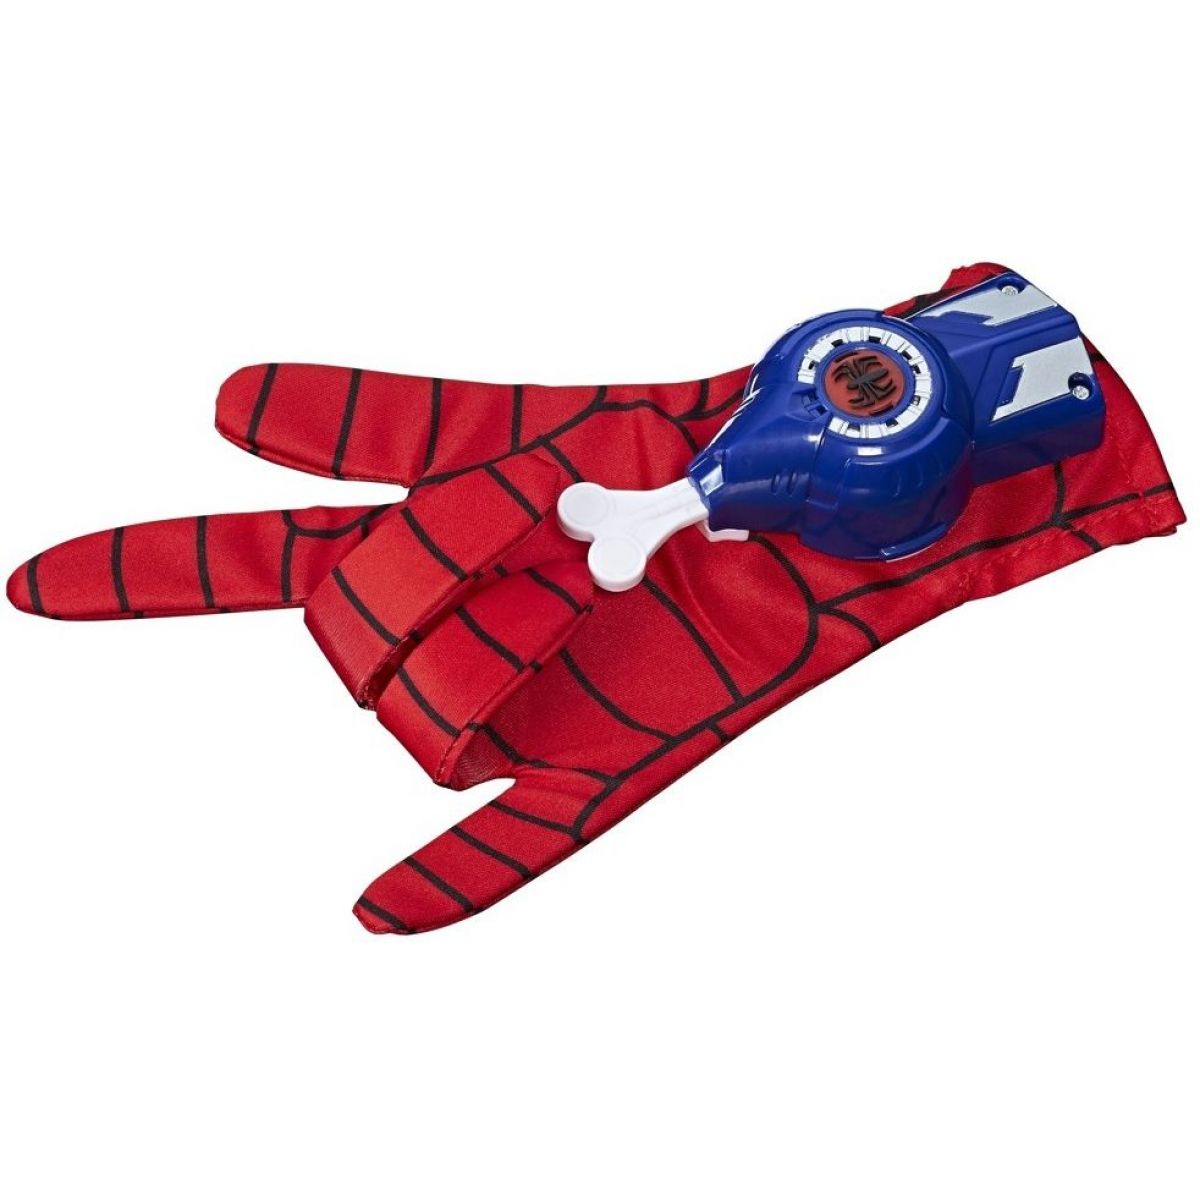 Hasbro Spider-man Hero pavučinomet